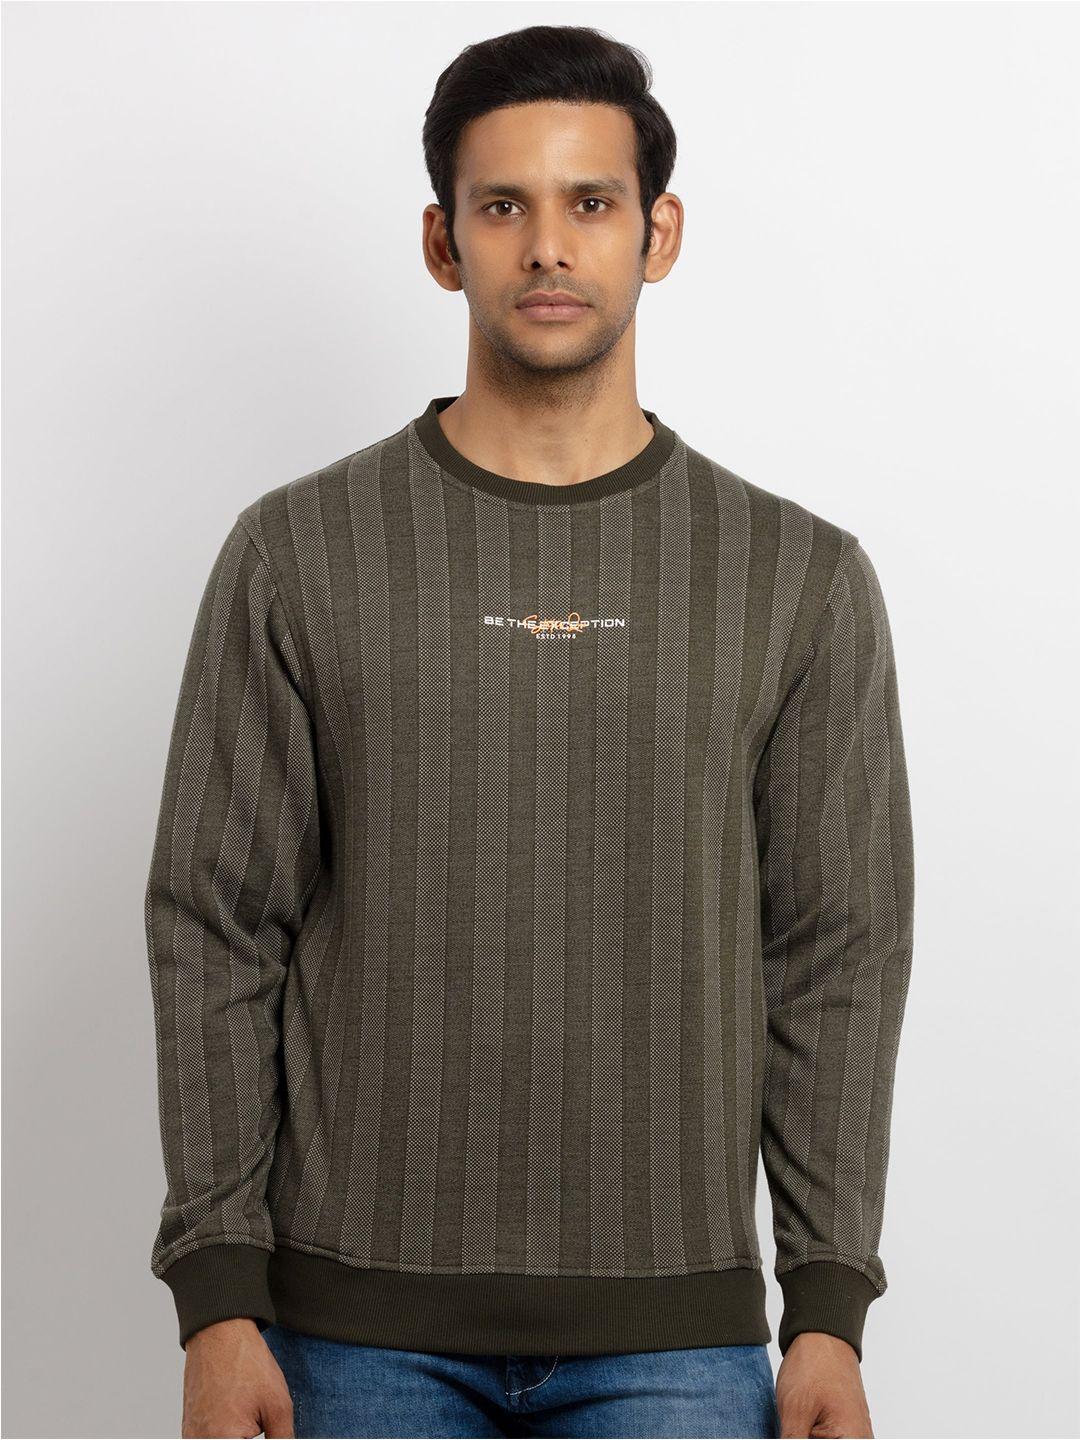 status quo men plus size striped cotton sweatshirt